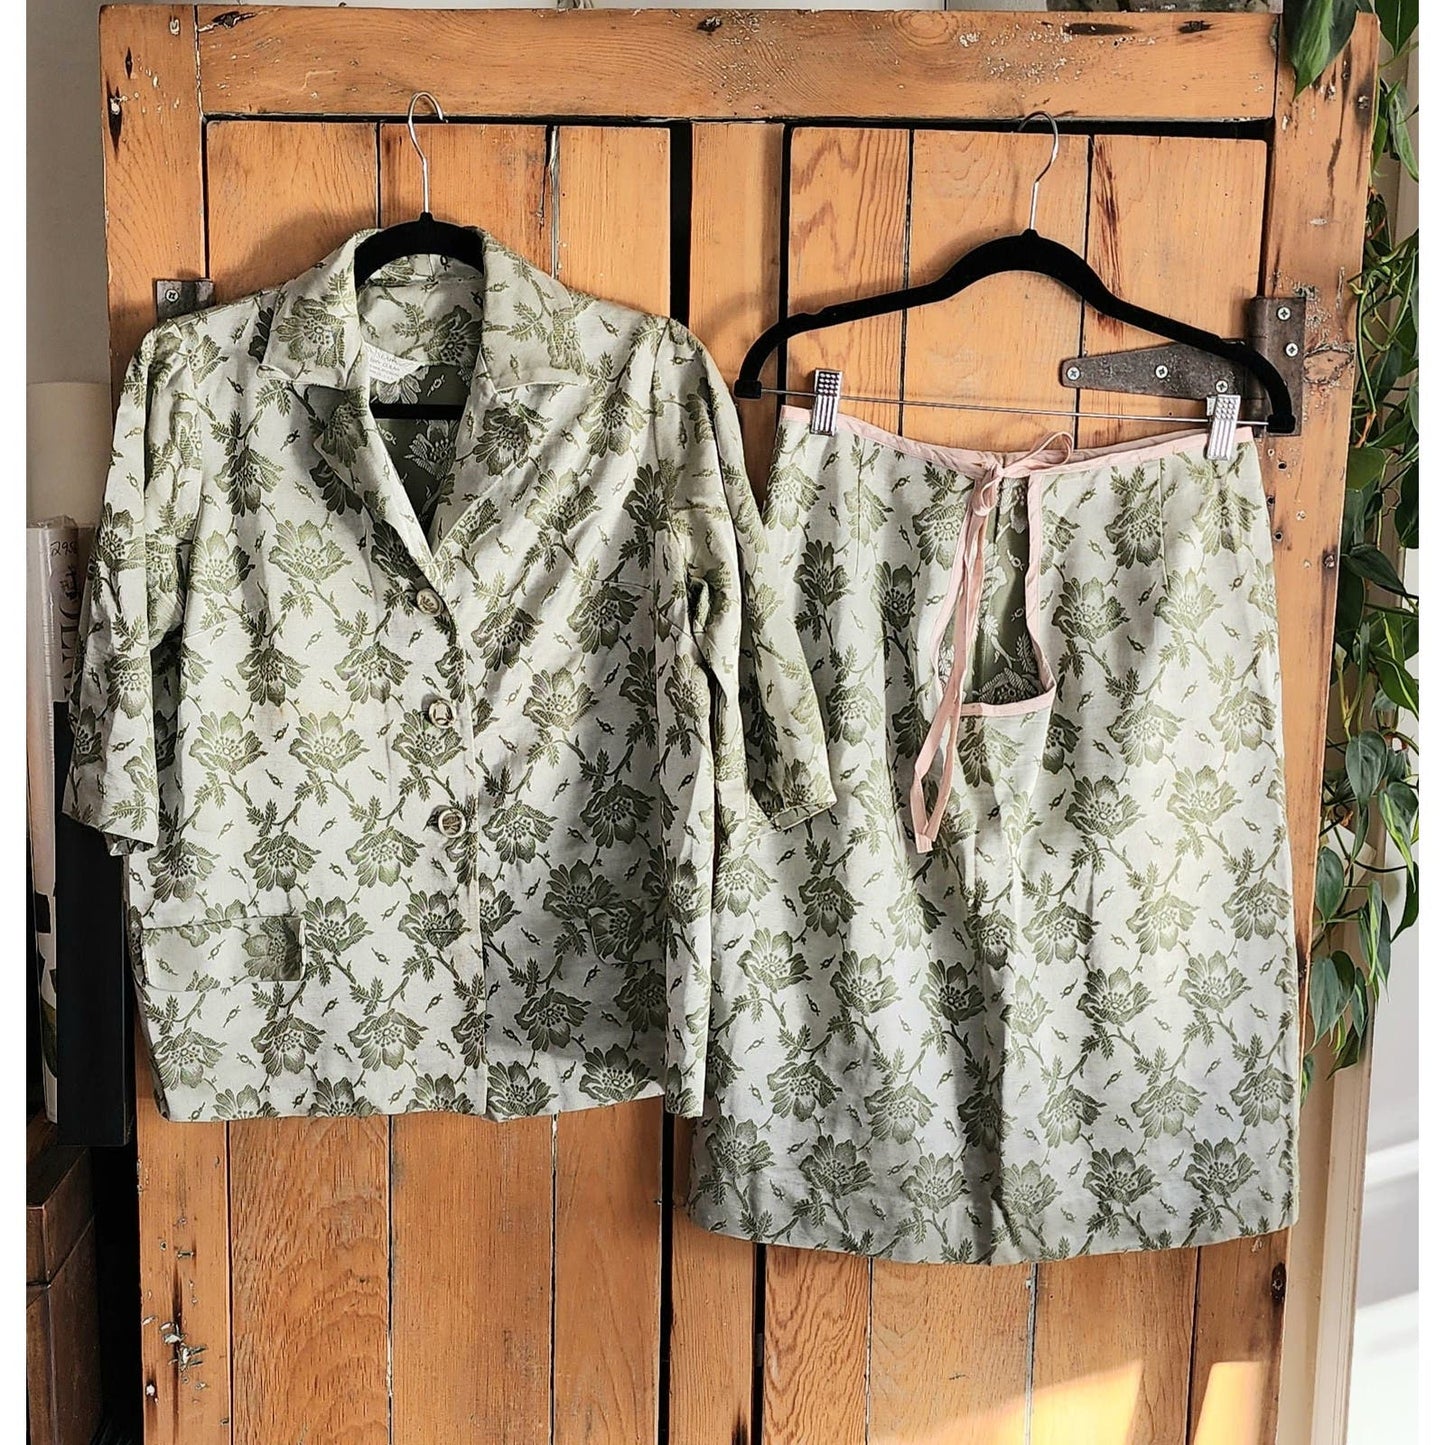 Vintage 60s Maternity Skirt Suit Light Green Floral Brocade Sears